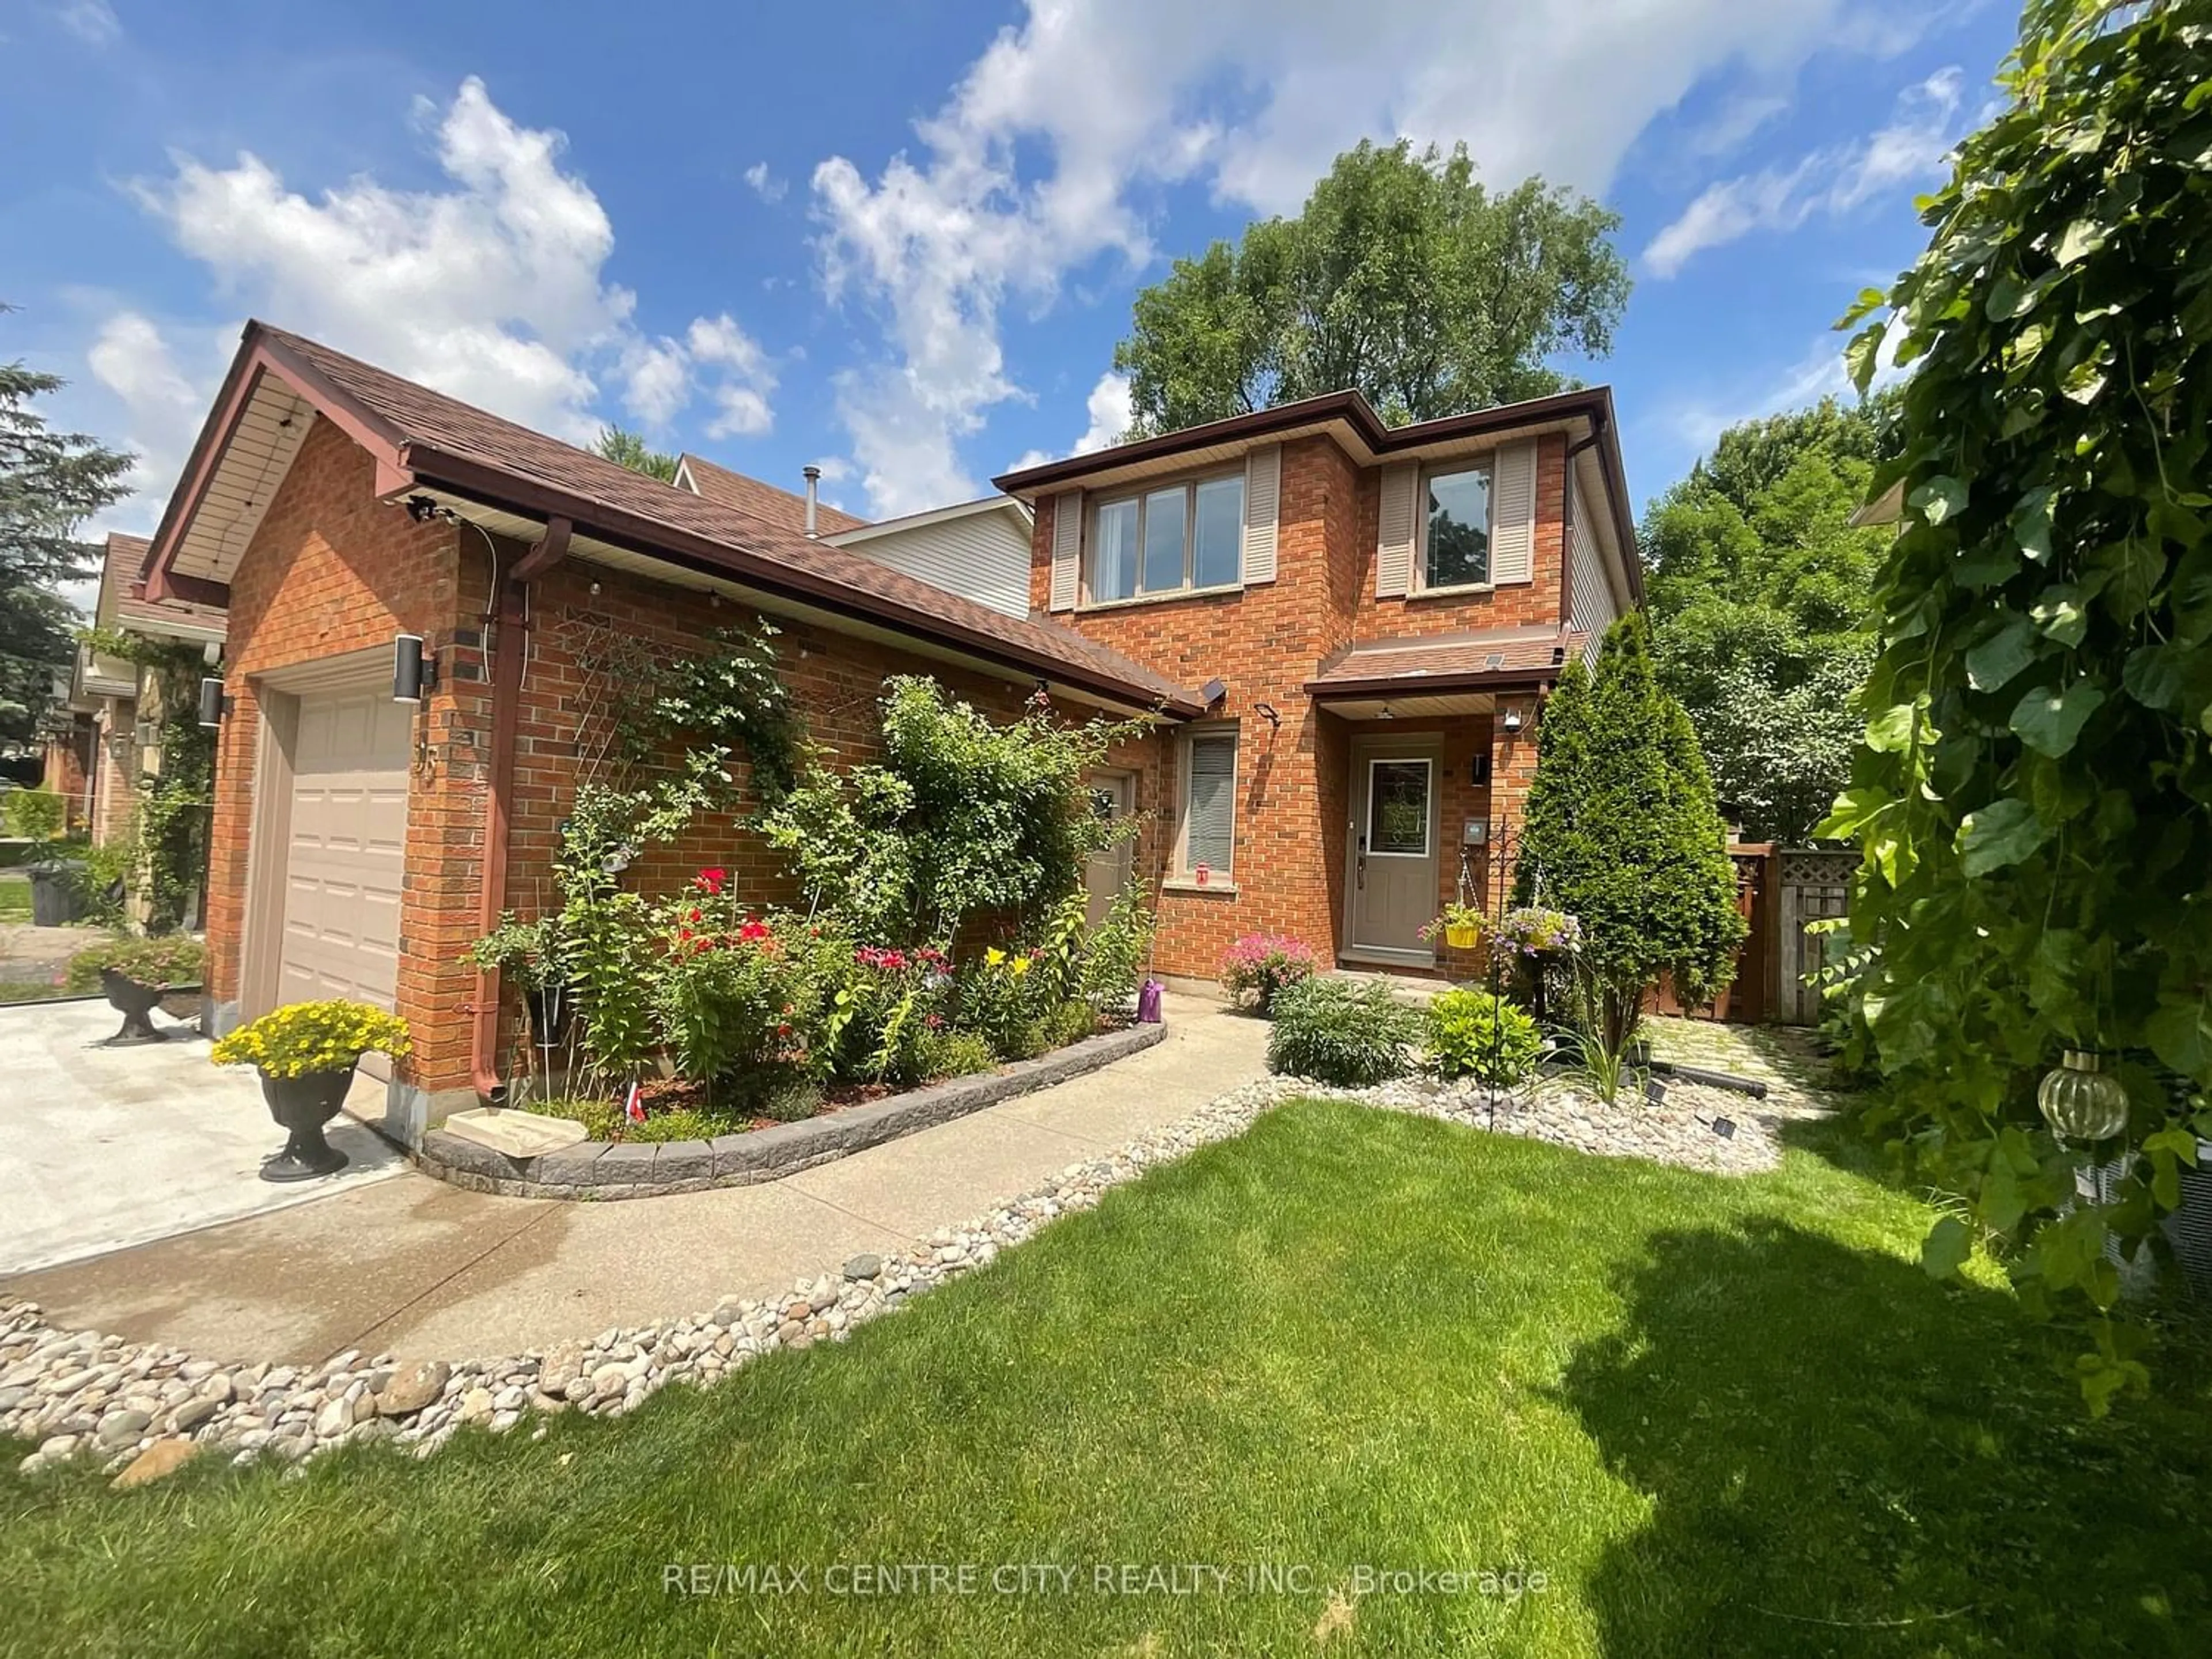 Home with brick exterior material for 95 Walmer Garden Gdns, London Ontario N6G 4H1